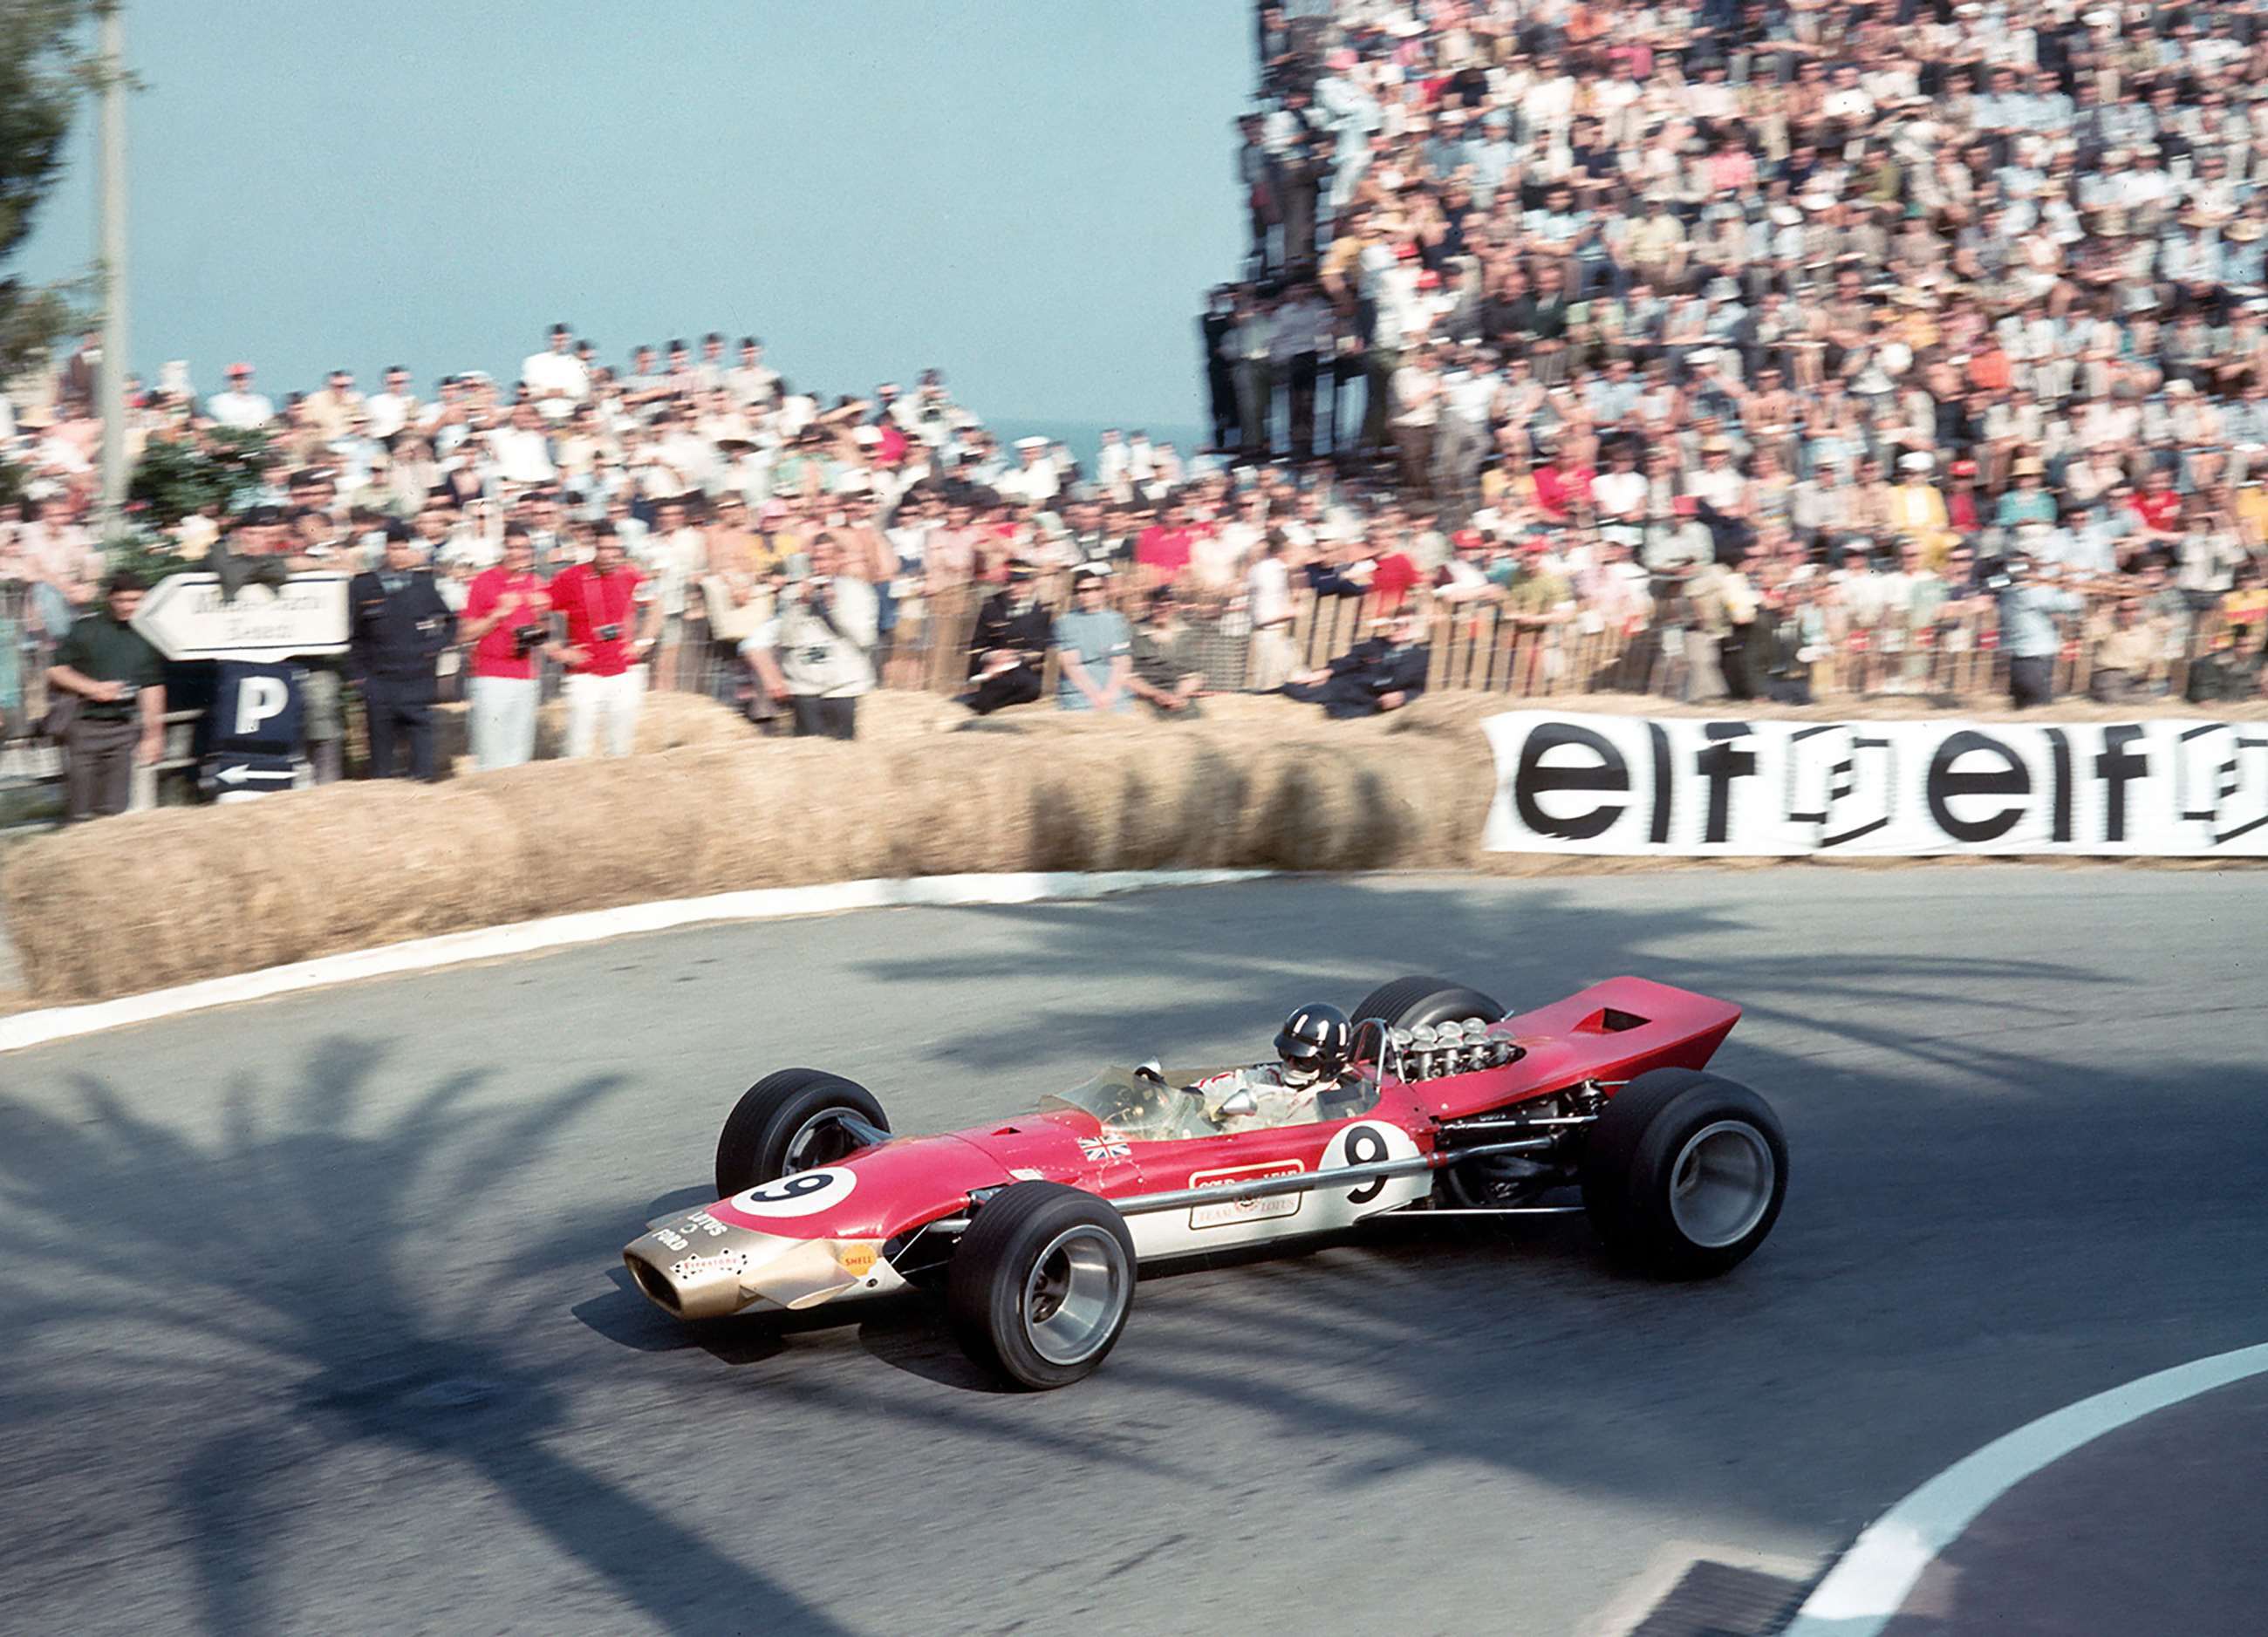 1962 World Champion Graham Hill in his 1968 World Championship-winning Lotus-Ford 49B - here on his winning way in that year’s Monaco GP